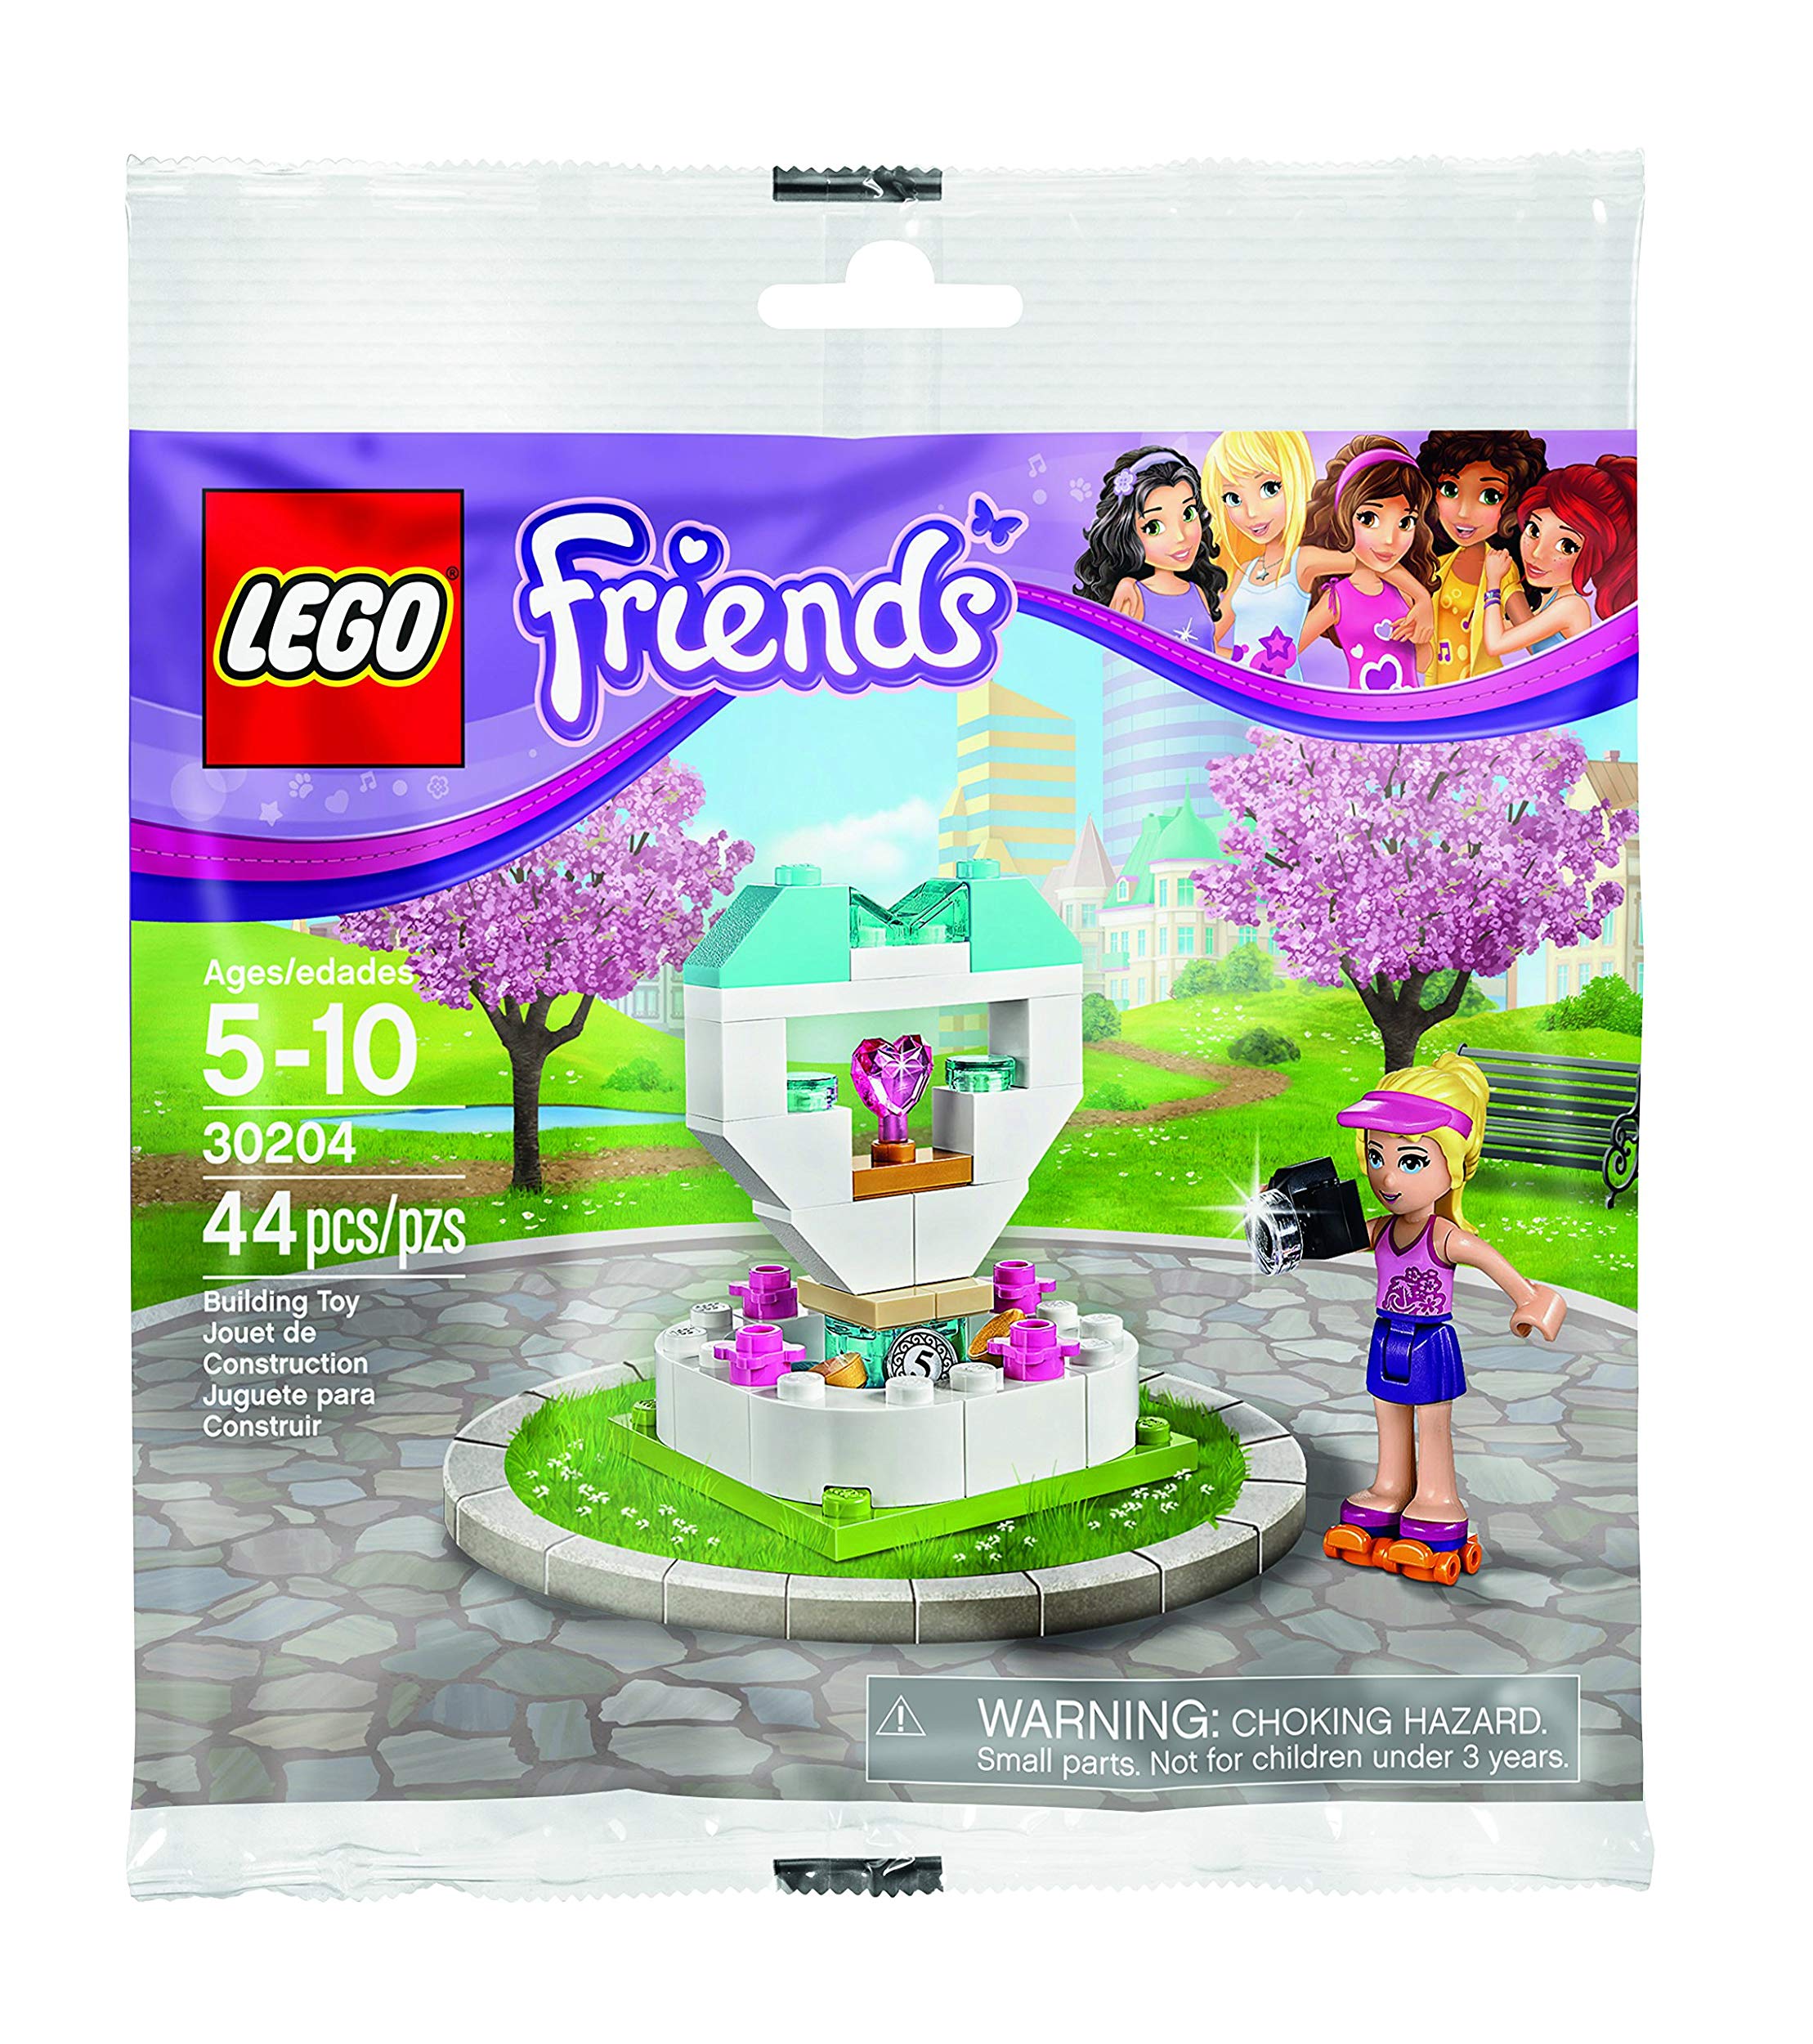 Lego Friends Wishing Well In Bag Zippo New